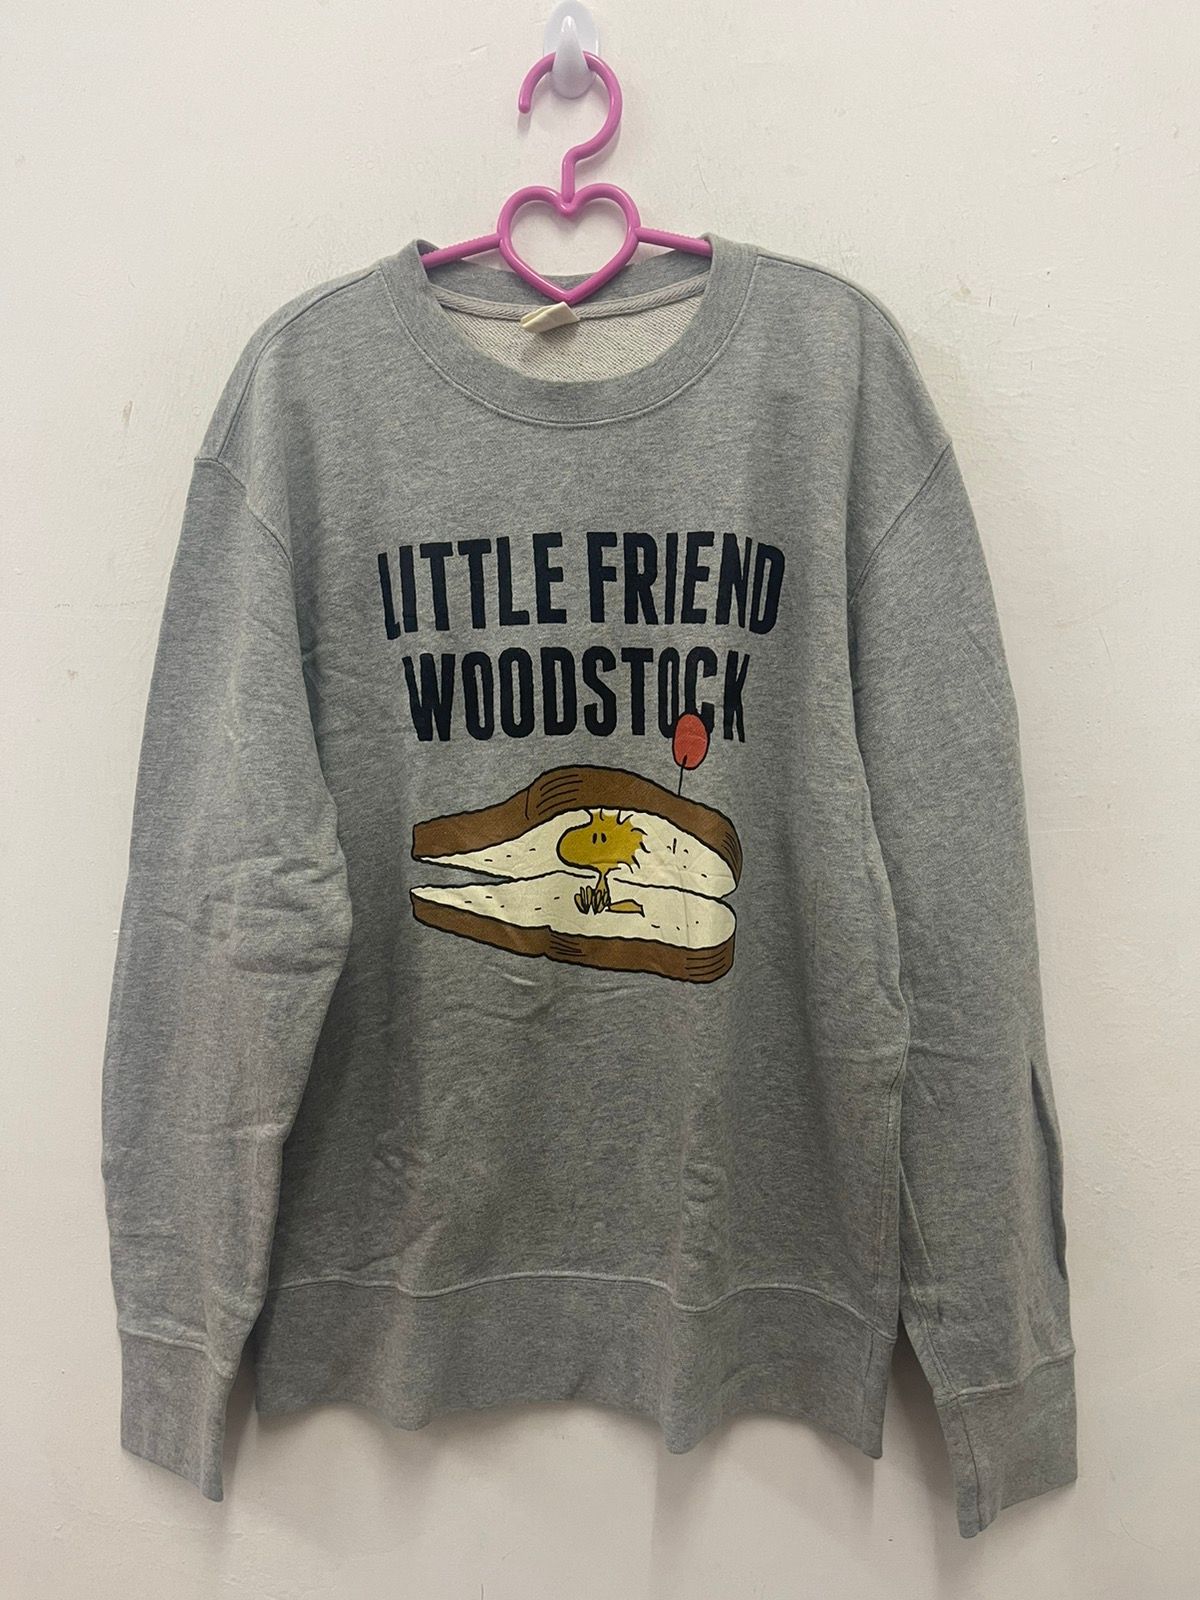 Uniqlo Rare PEANUTS Little Friend Woodstock Sweatshirt Size US M / EU 48-50 / 2 - 1 Preview